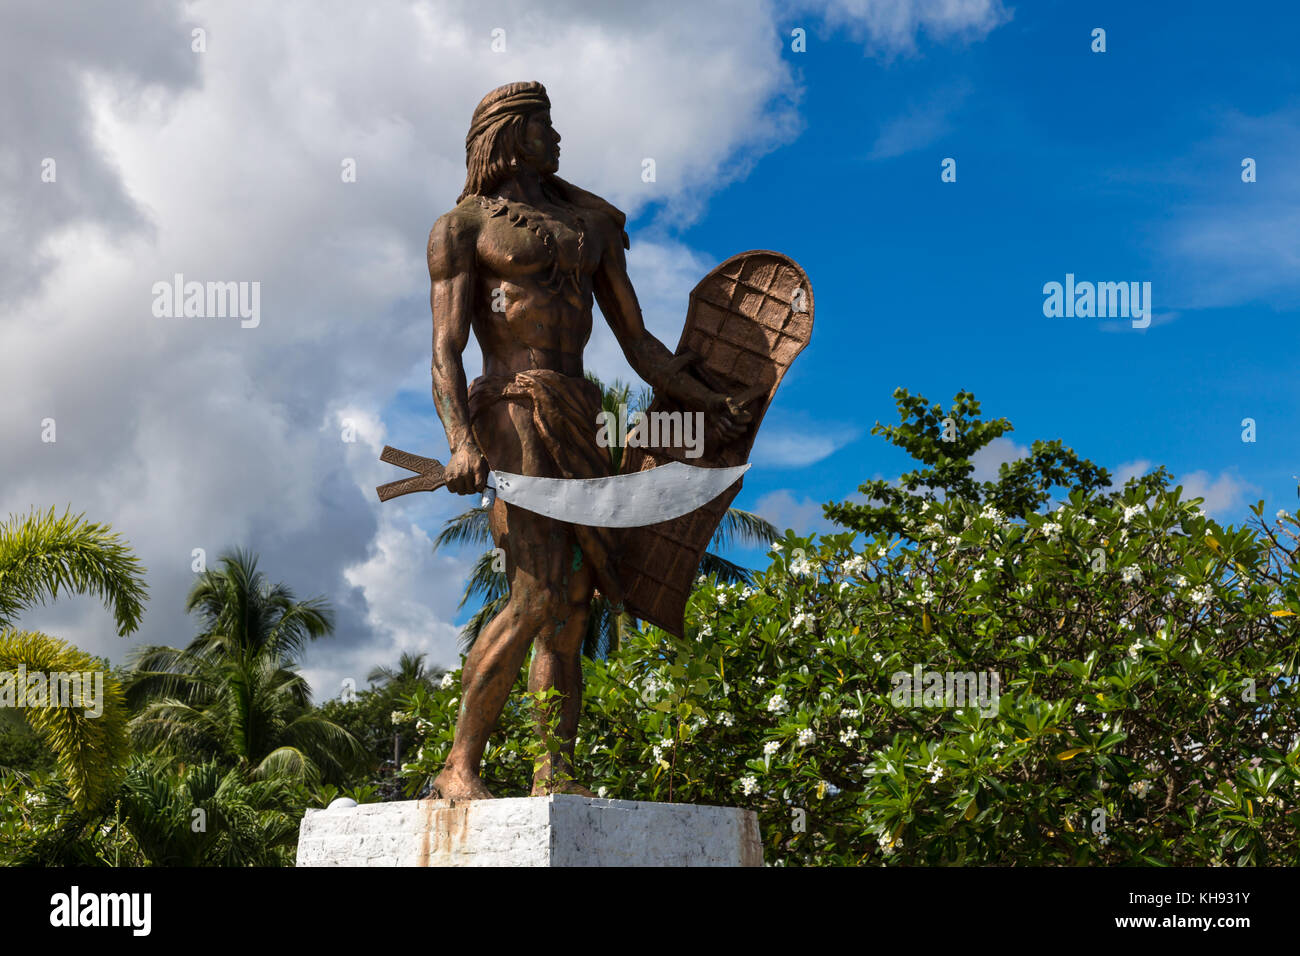 Asia, Philippines, Cebu, Mactan, Mactan Shrine, statue of Lapu Lapu, local chieftain who defeated the forces of Ferdinand Magellan, in 1521, Stock Photo